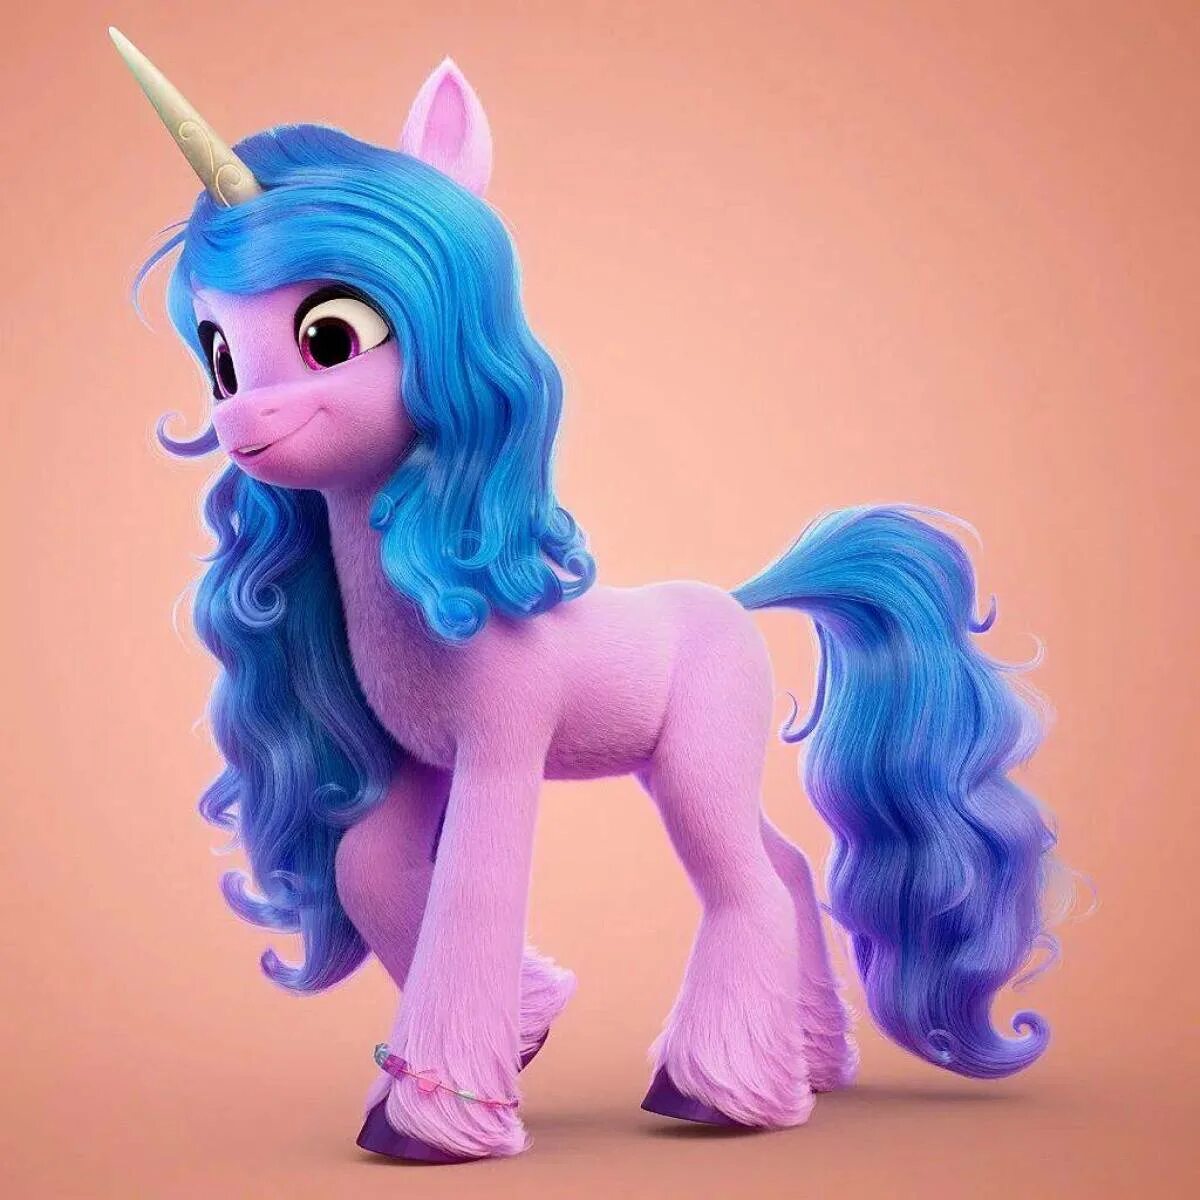 New pony. My little Pony g5 Иззи фигурка. МЛП 5 поколение. Izzy пони g5. My little Pony a New Generation Izzy Moonbow.